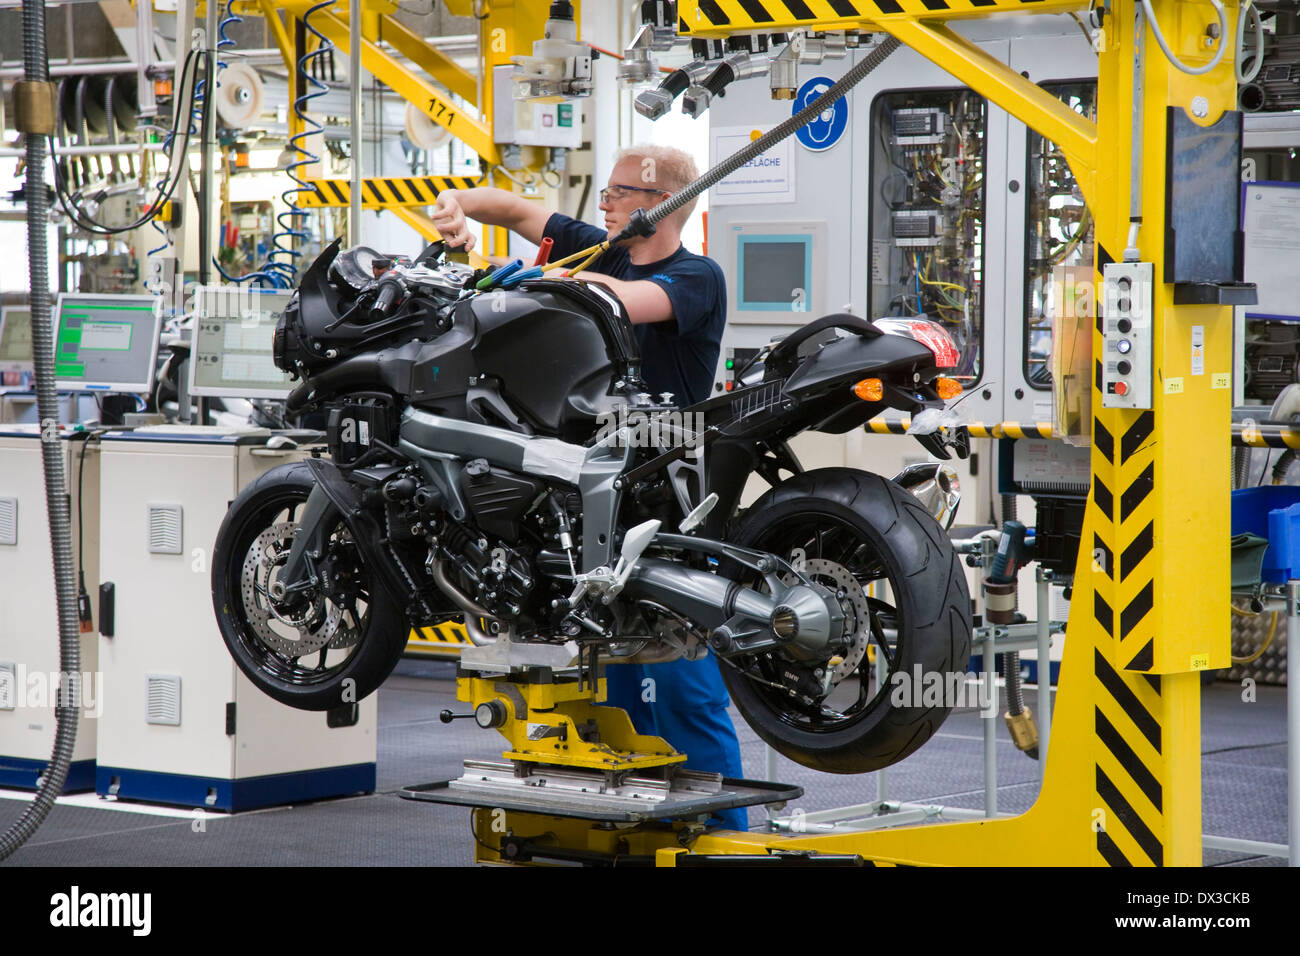 BMW Motorrad-Werk in Berlin Stockfotografie - Alamy